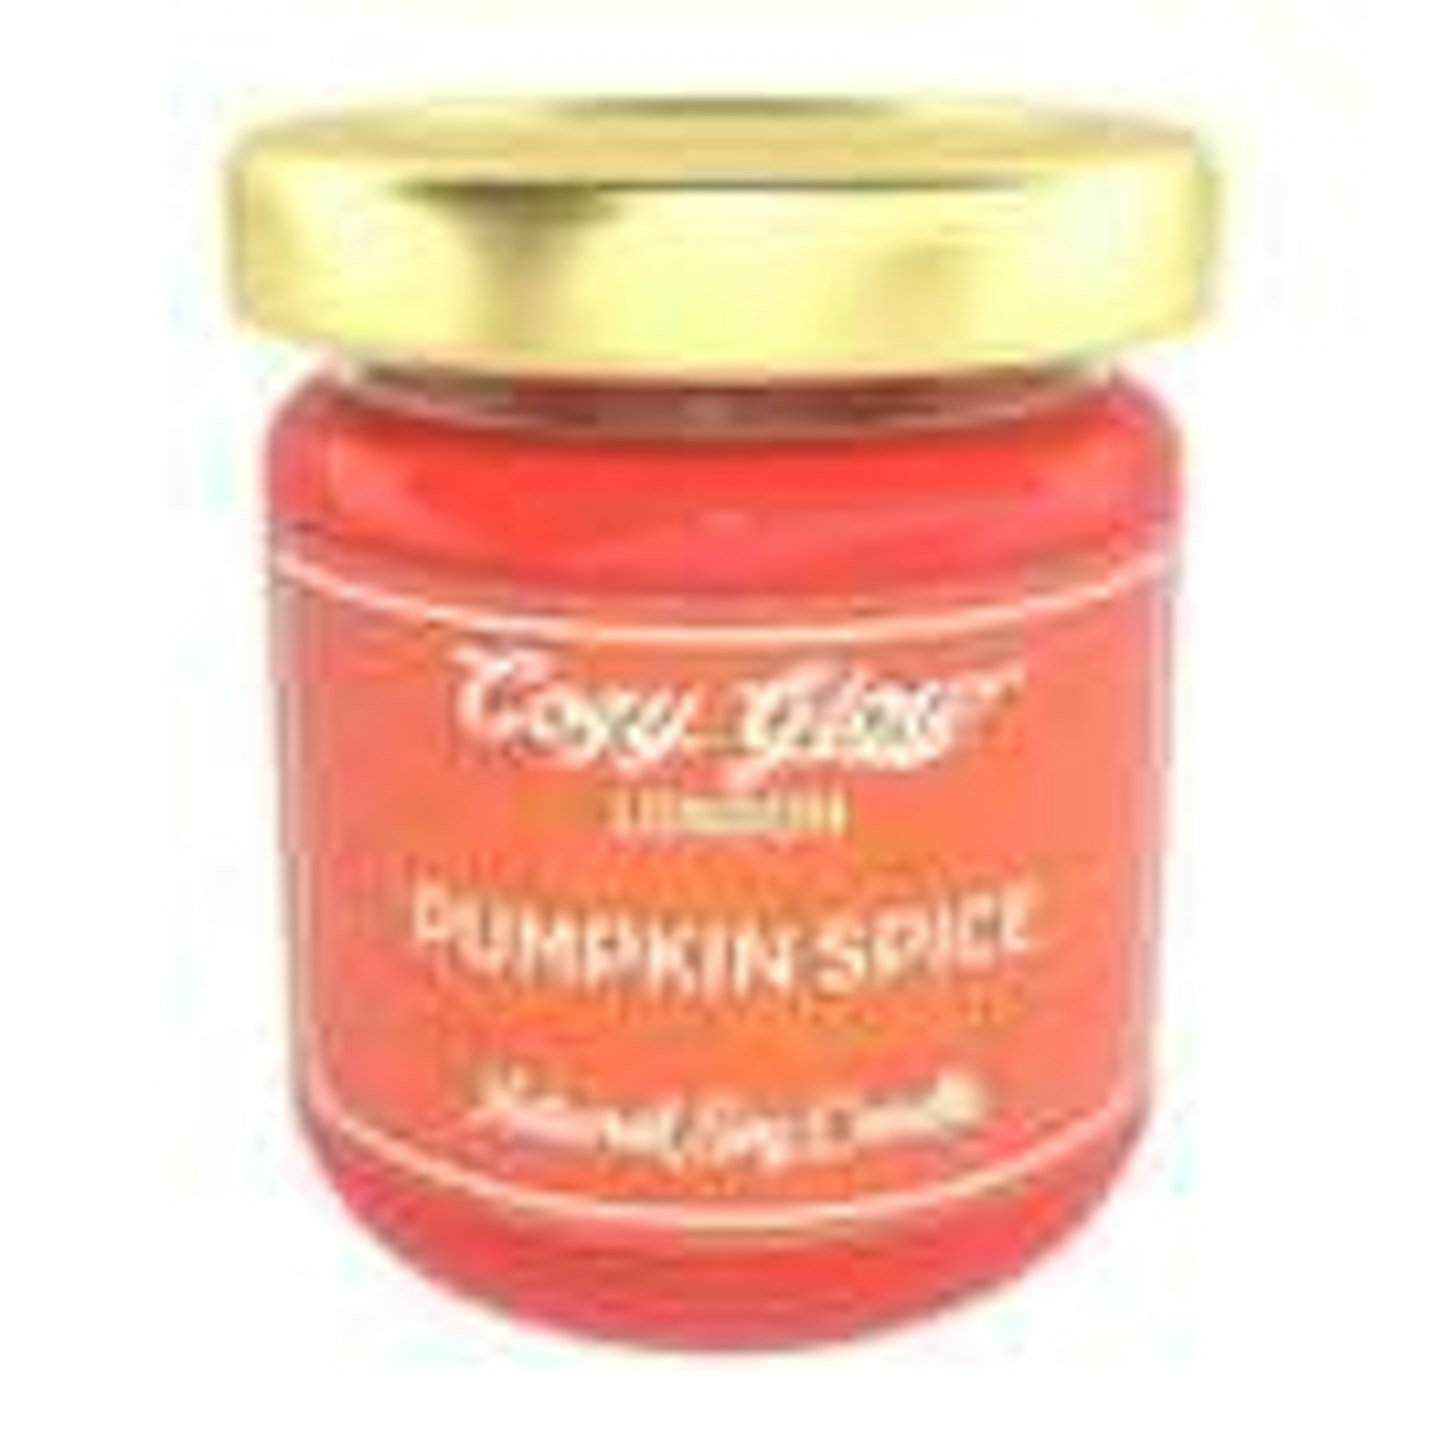 Cozy Glow Pumpkin Spice Regular Soy Candle